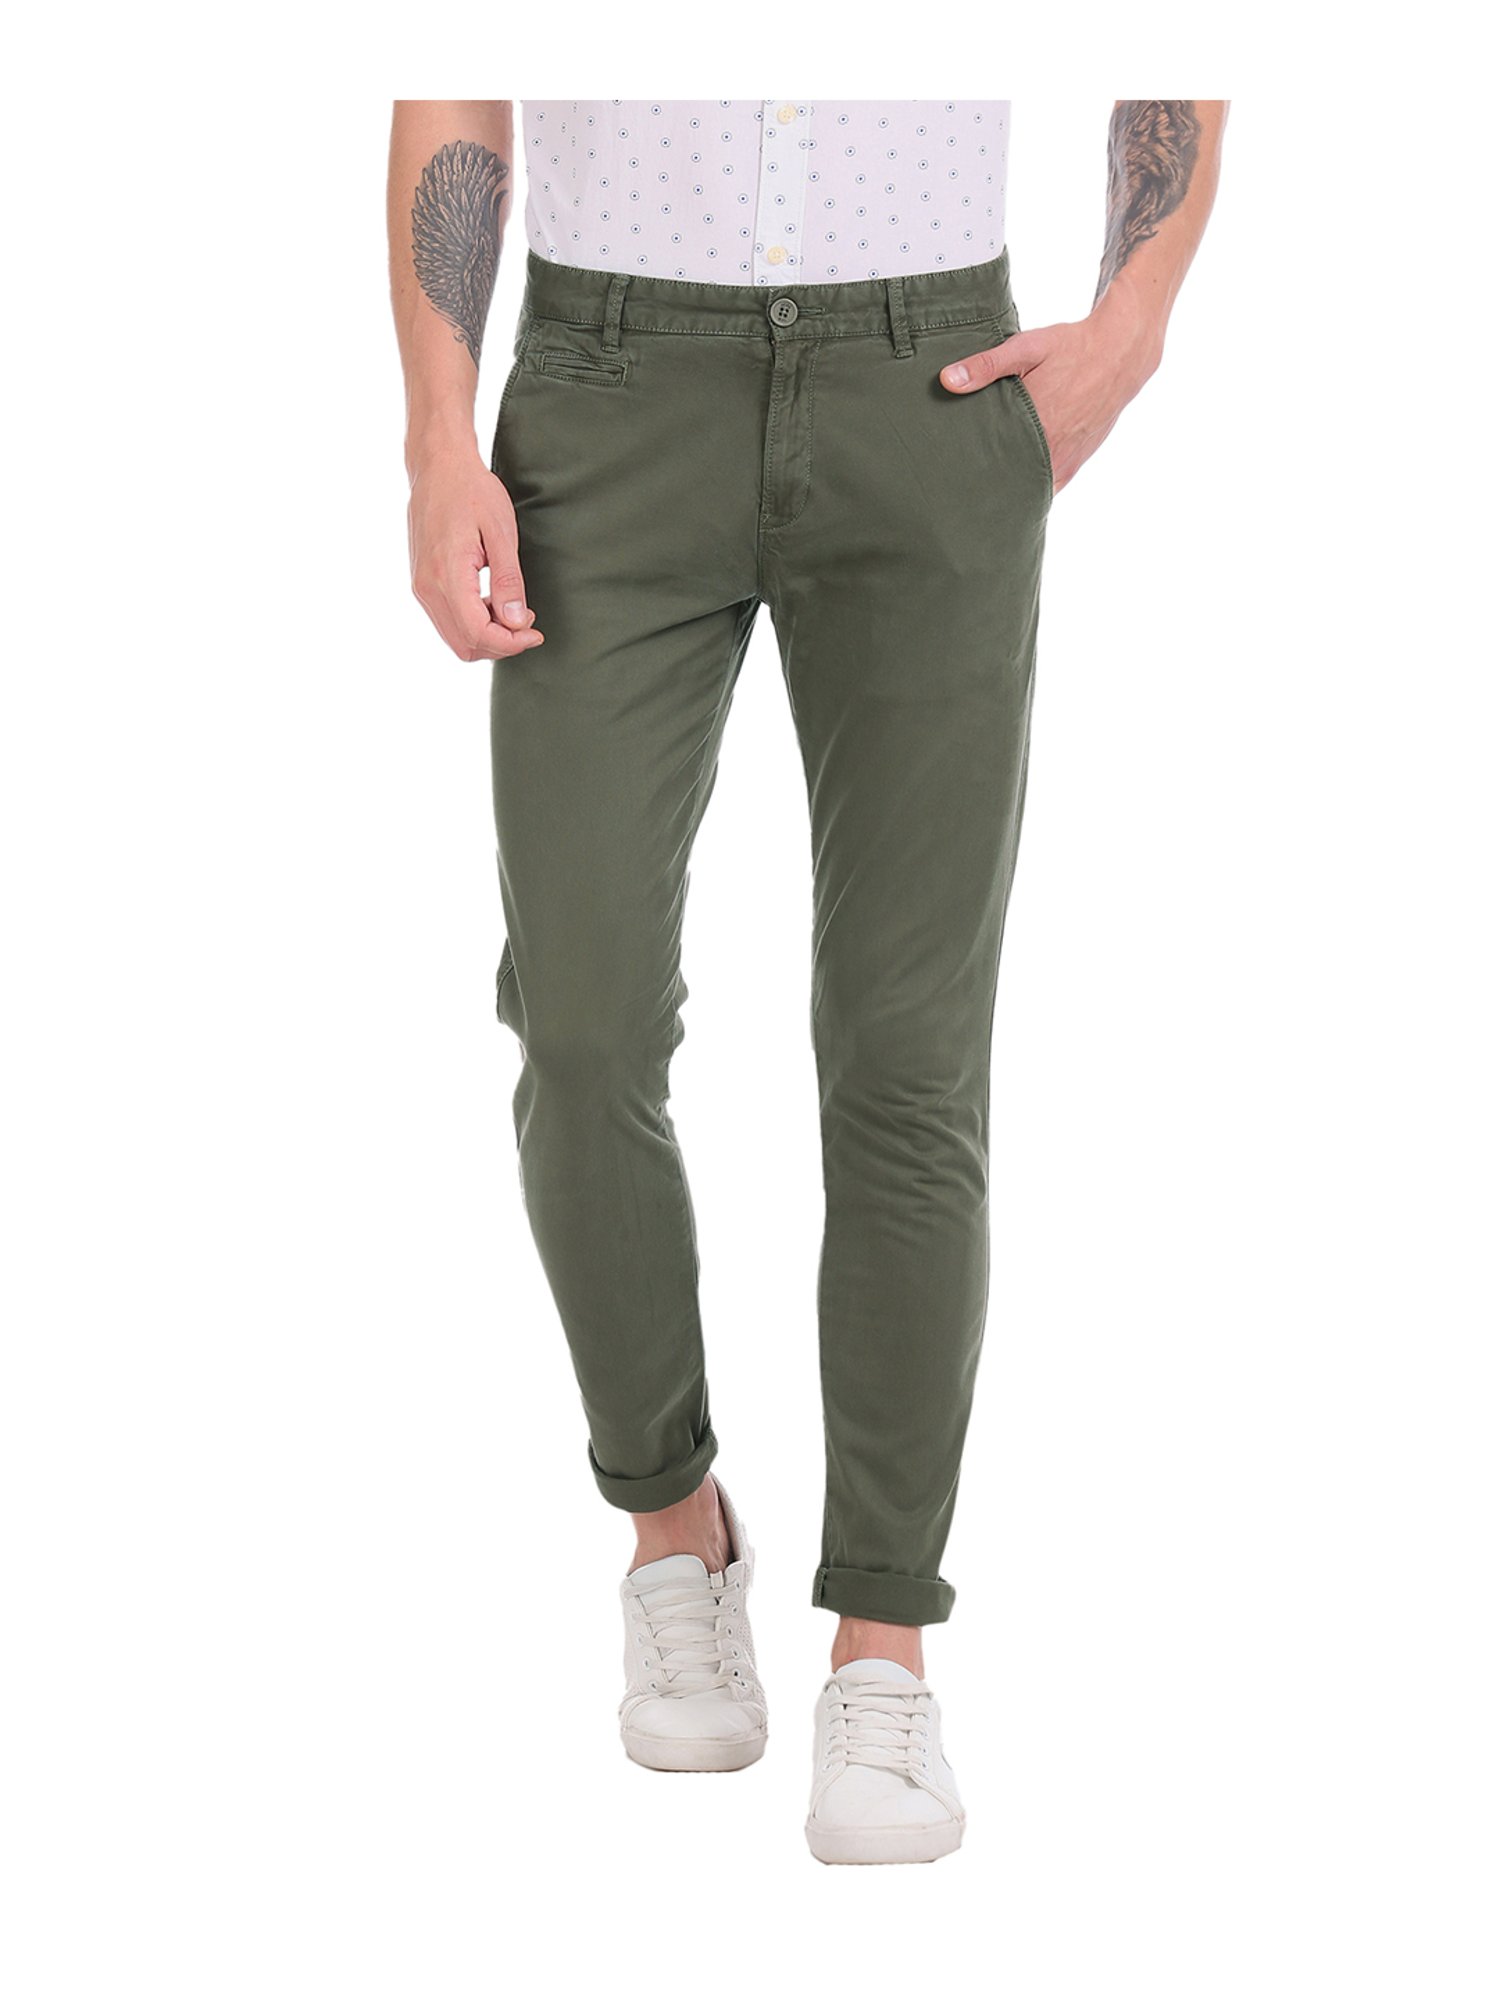 AEROPOSTALE brown khaki pants 38 x 32 skinny some stretch | eBay